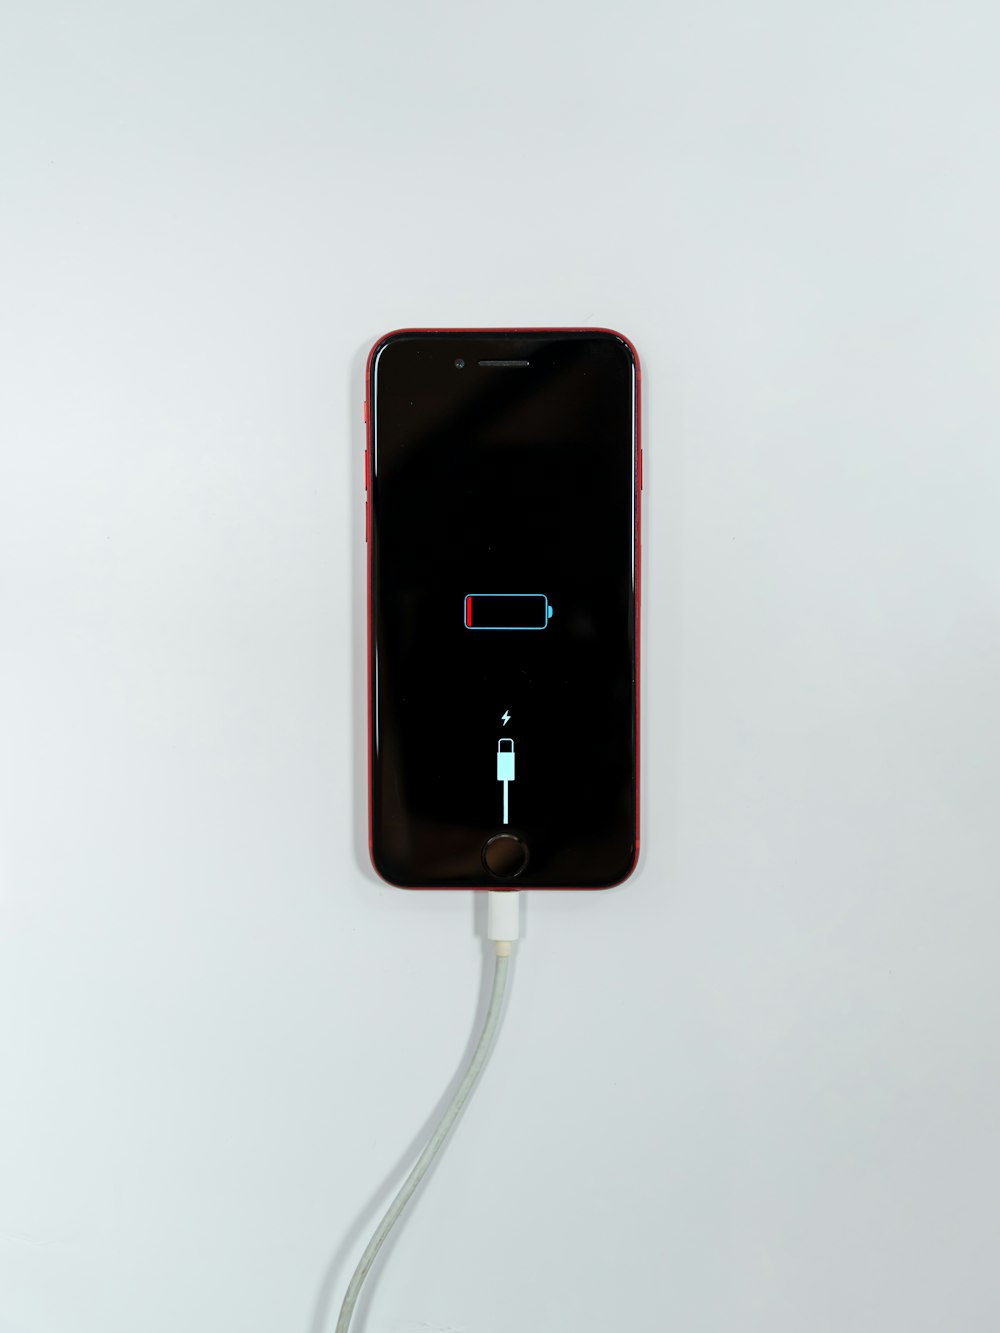 iPhone 5 negro sobre superficie blanca